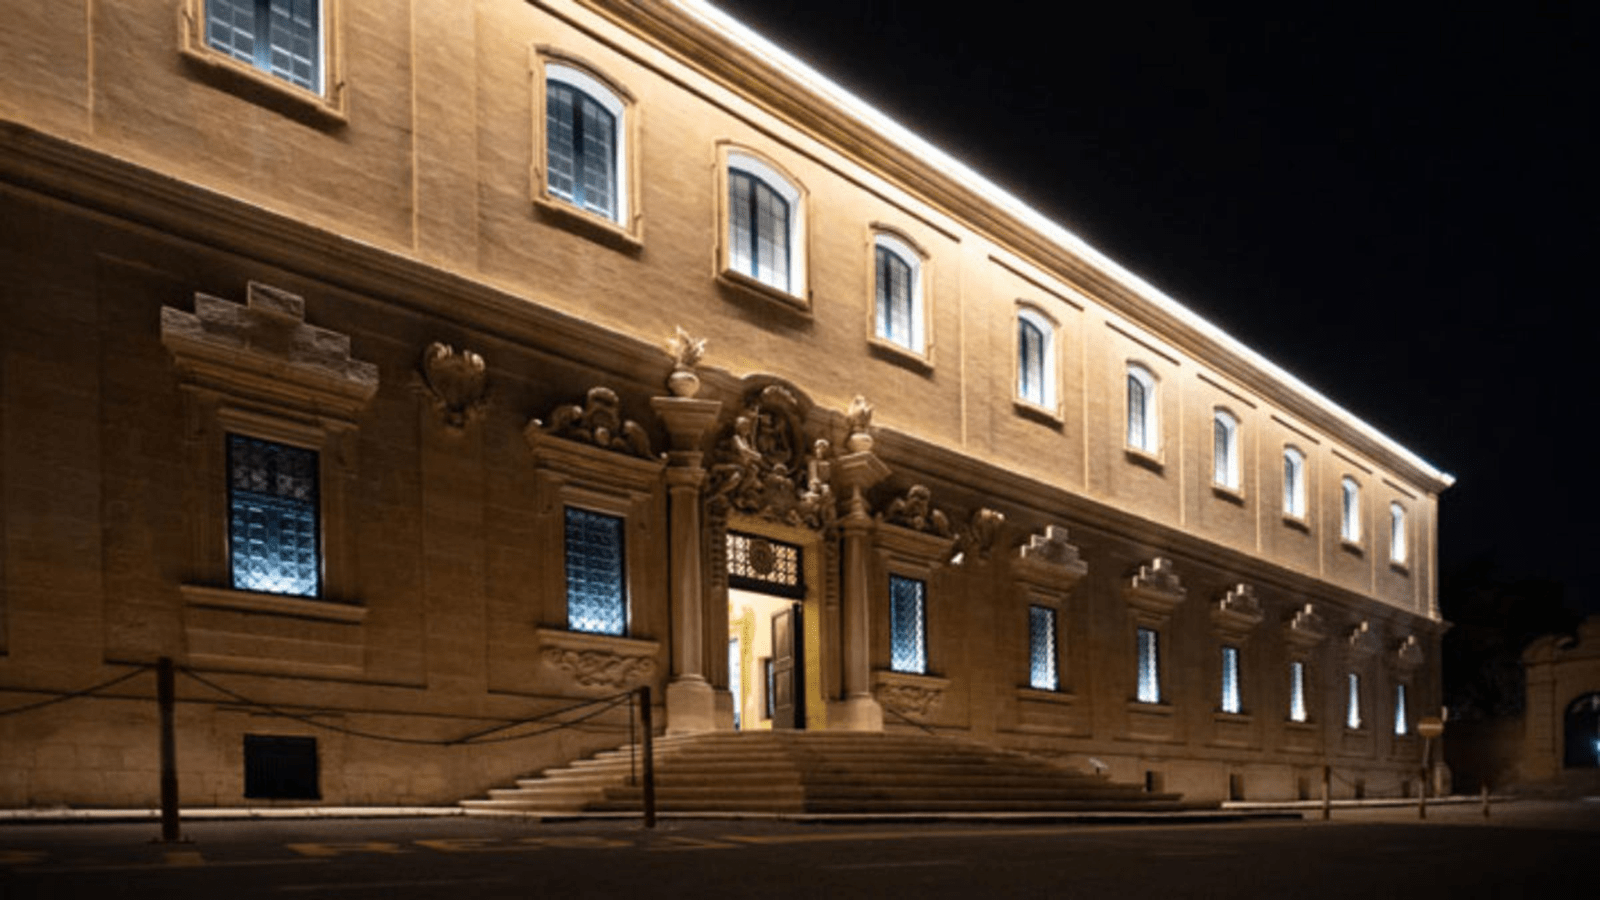 Church in Malta Reports €8.8 Million Deficit